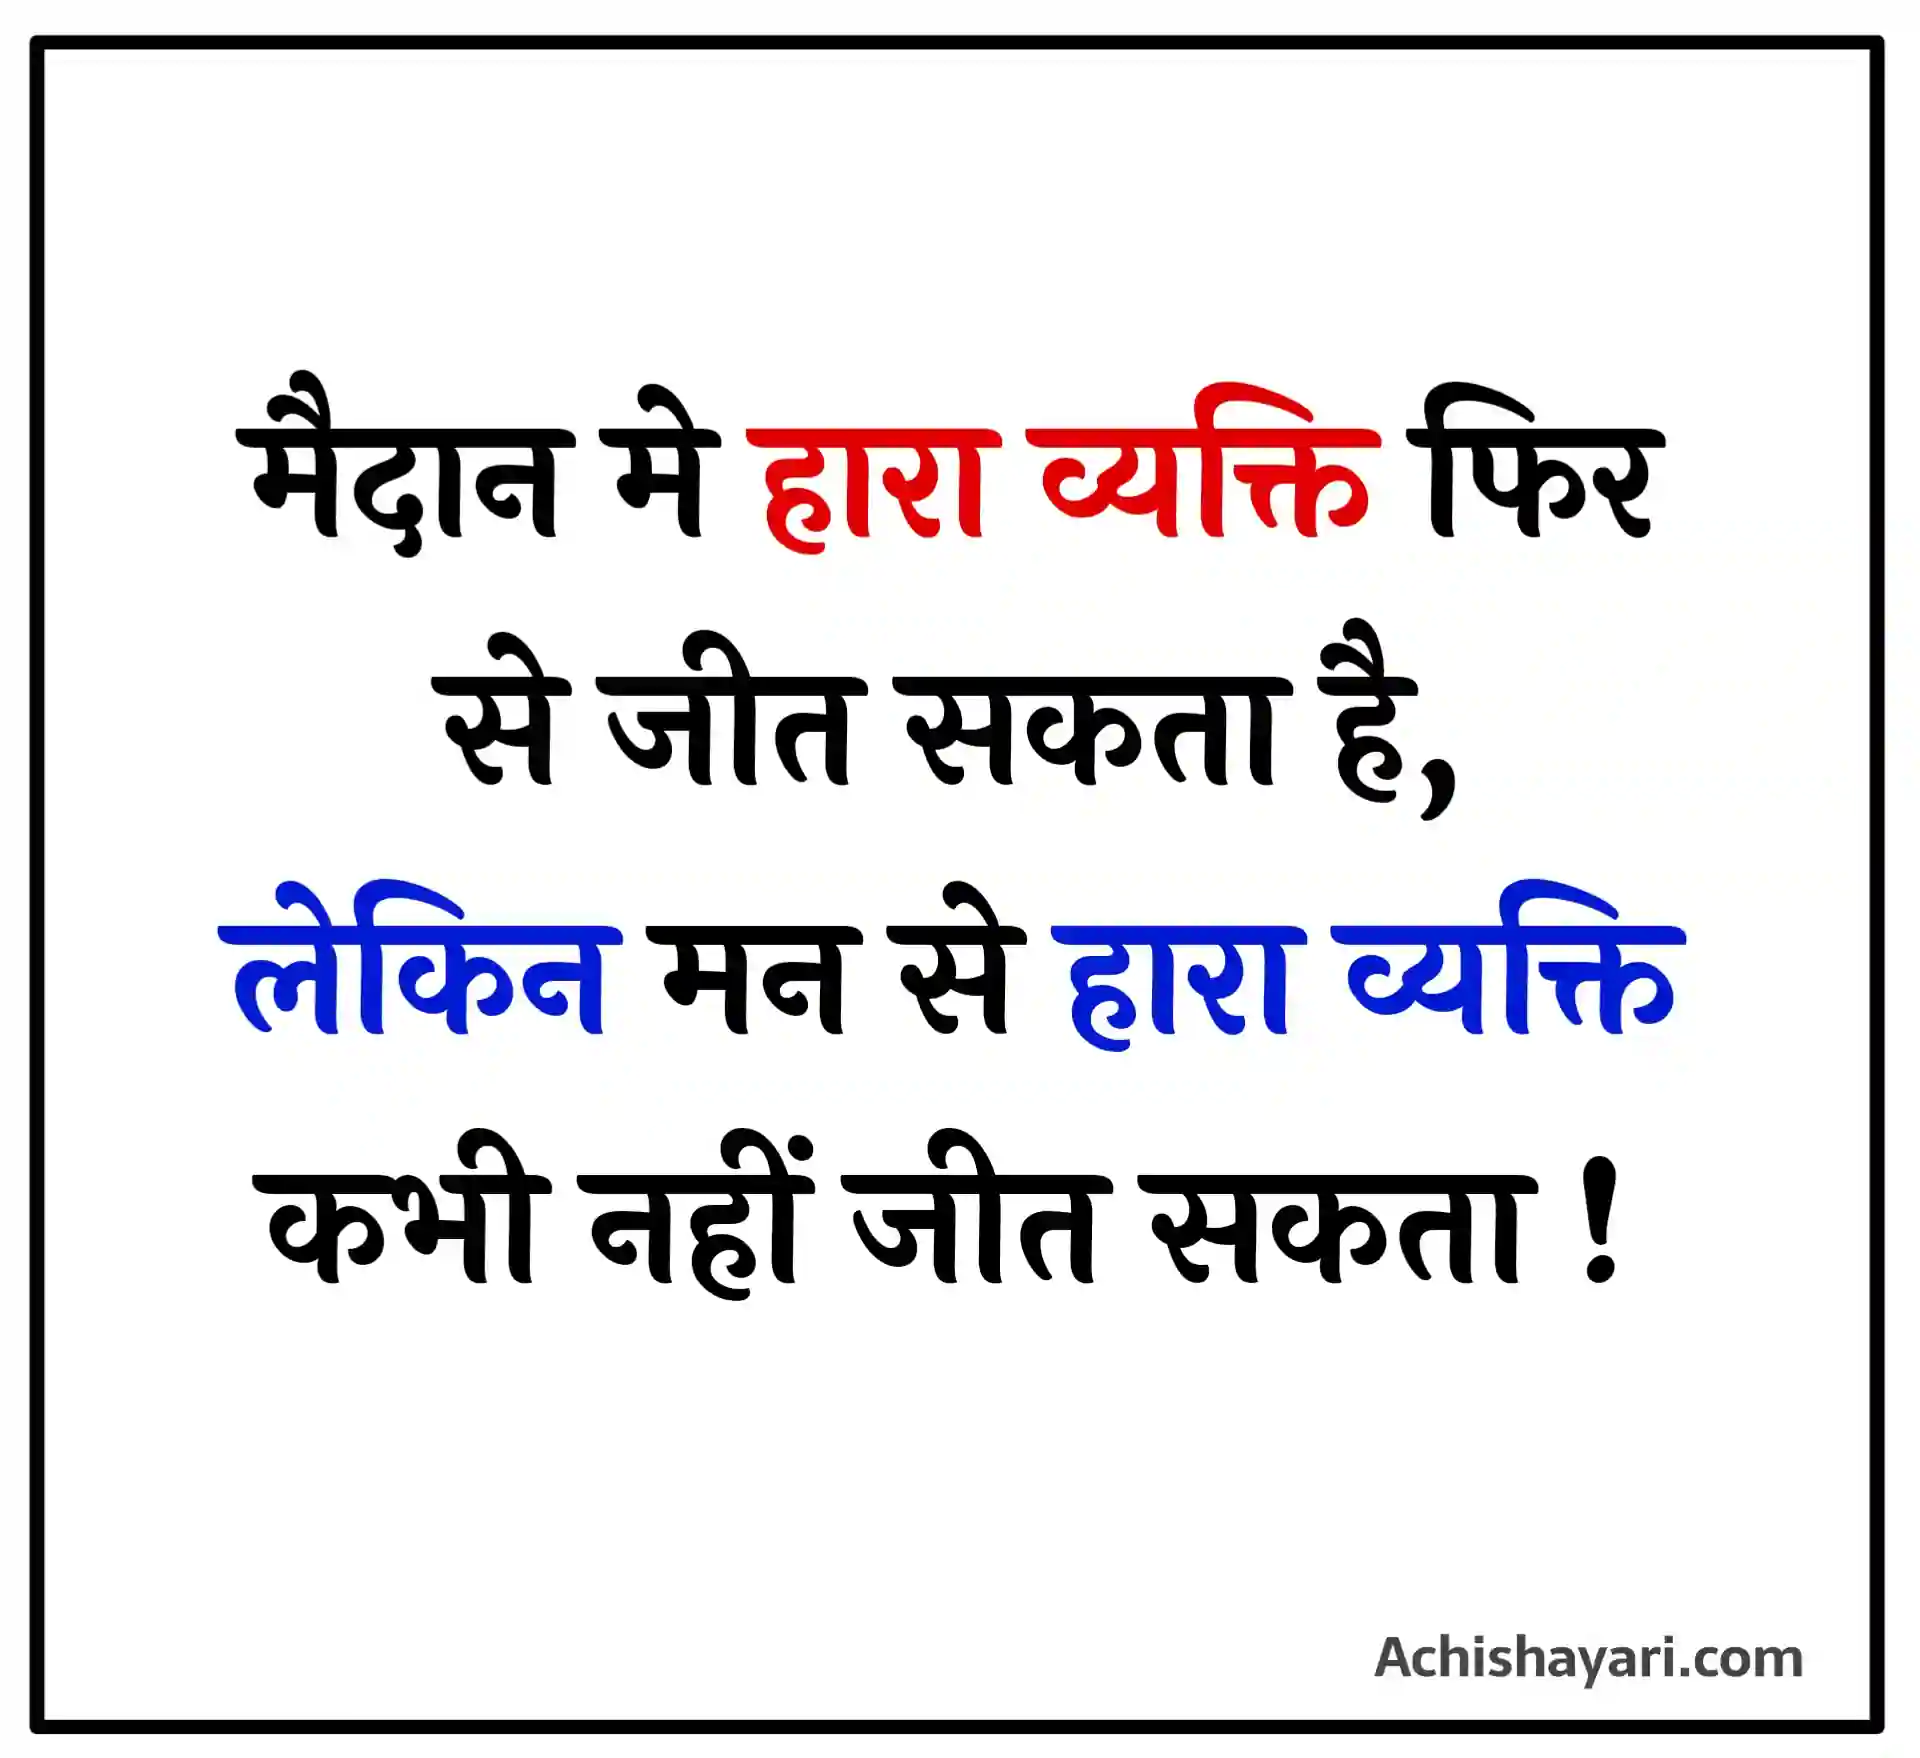 Vivek Bindra Motivational Quotes in Hindi